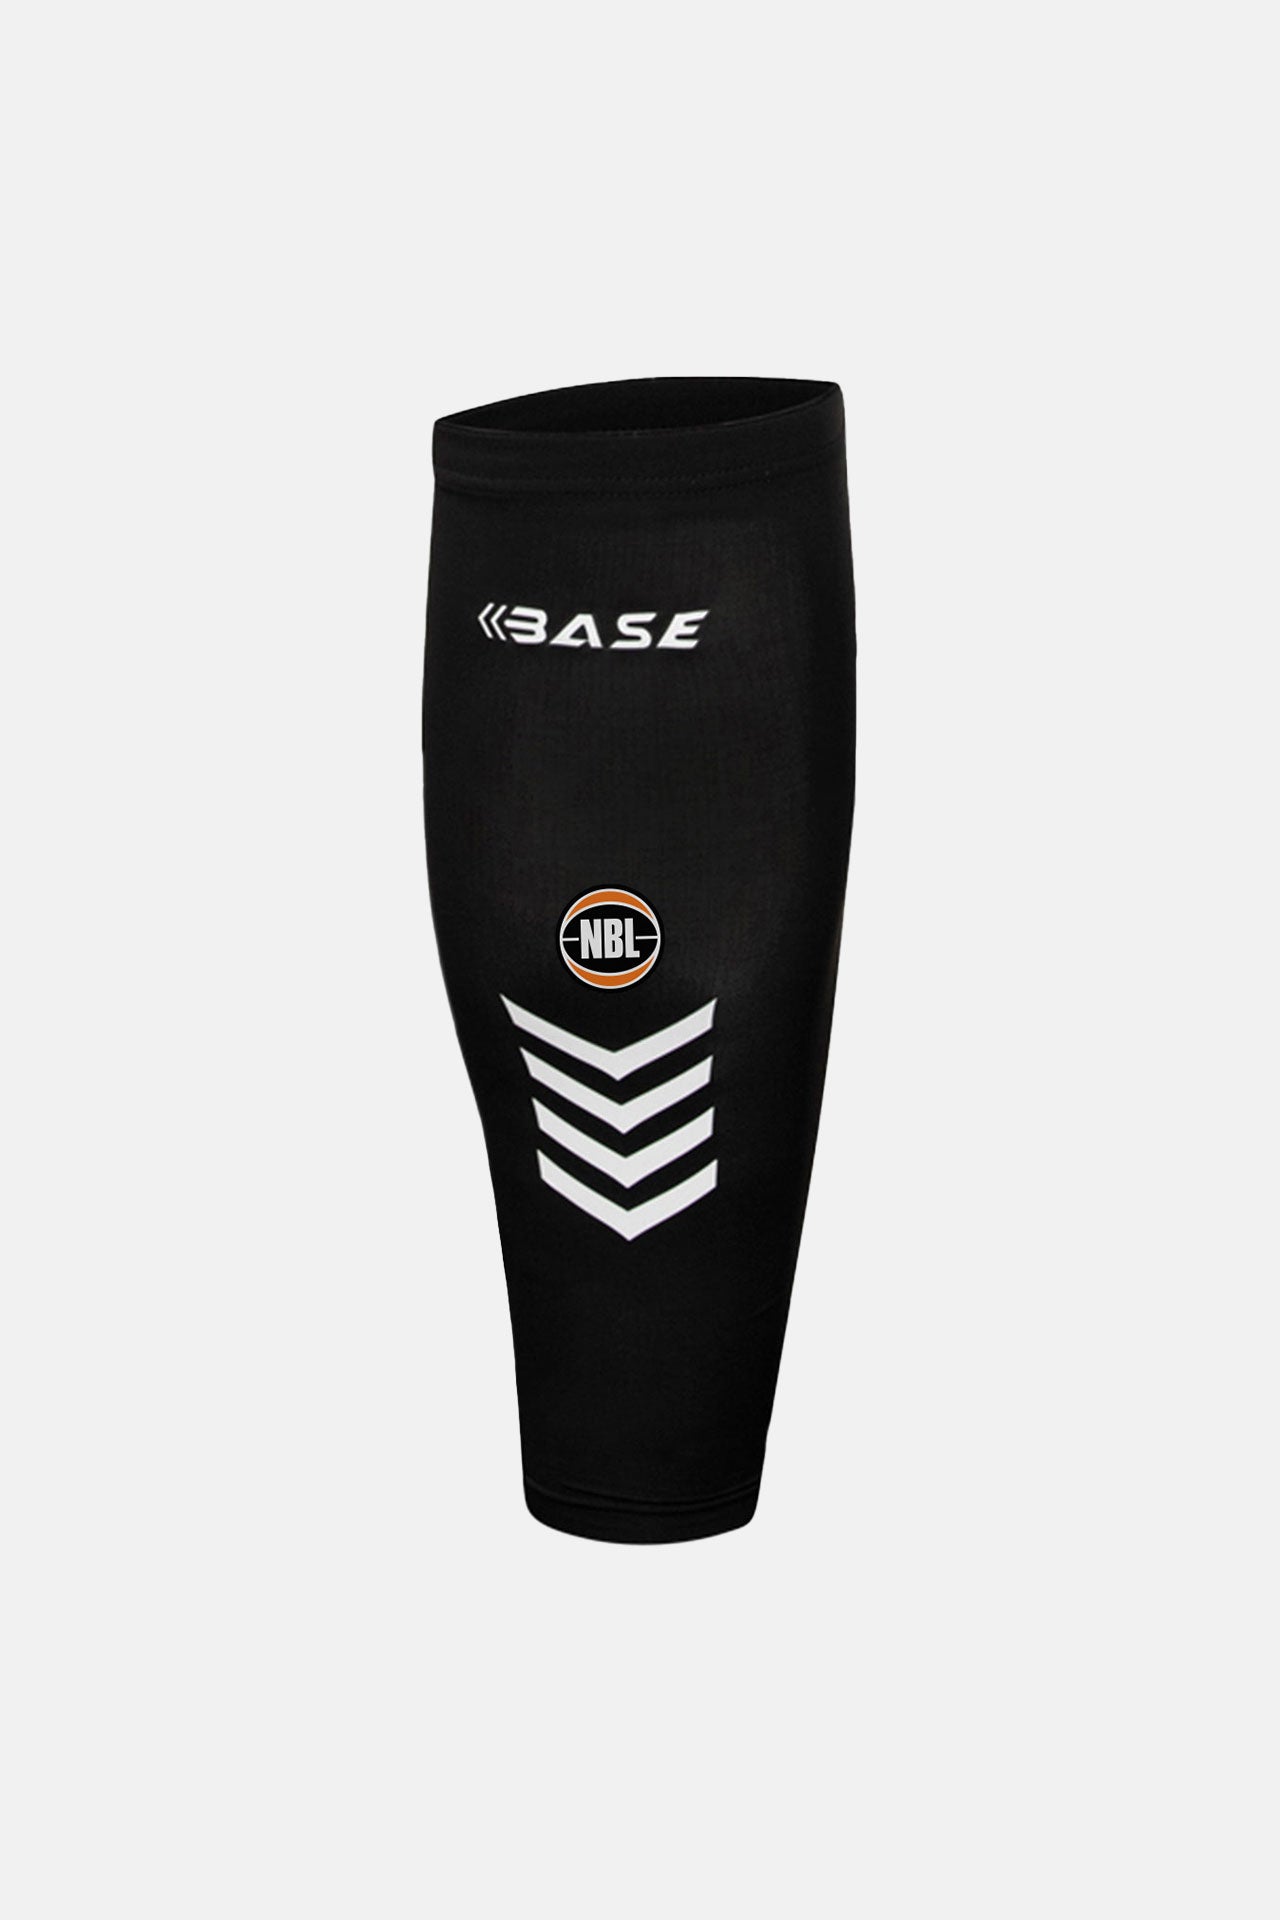 BASE + NBL Compression Calf Sleeve (Single) - Black – BASE Compression